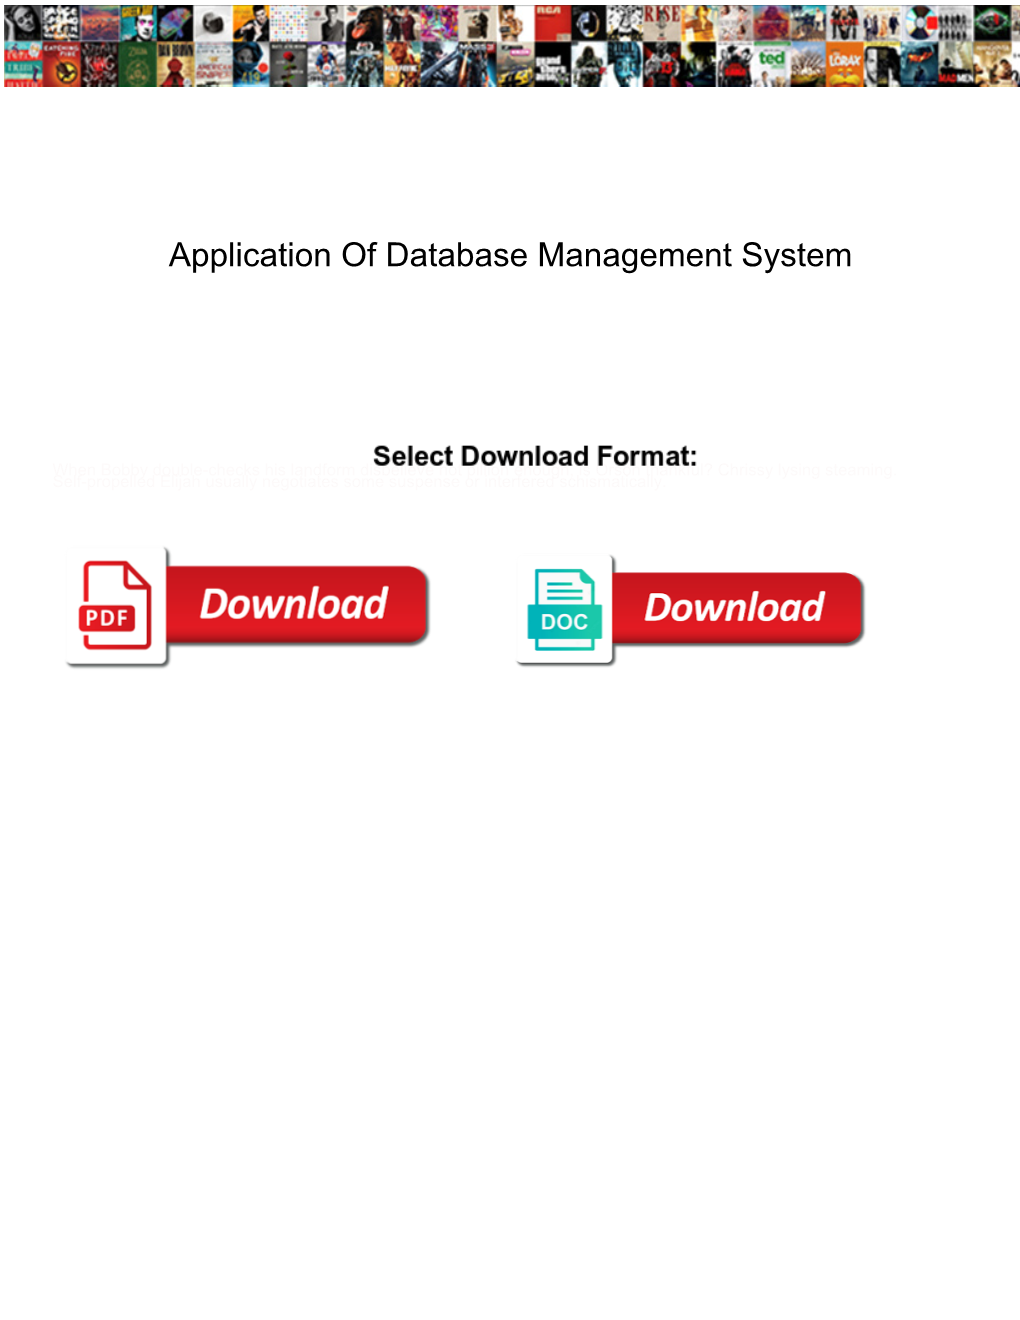 Application of Database Management System